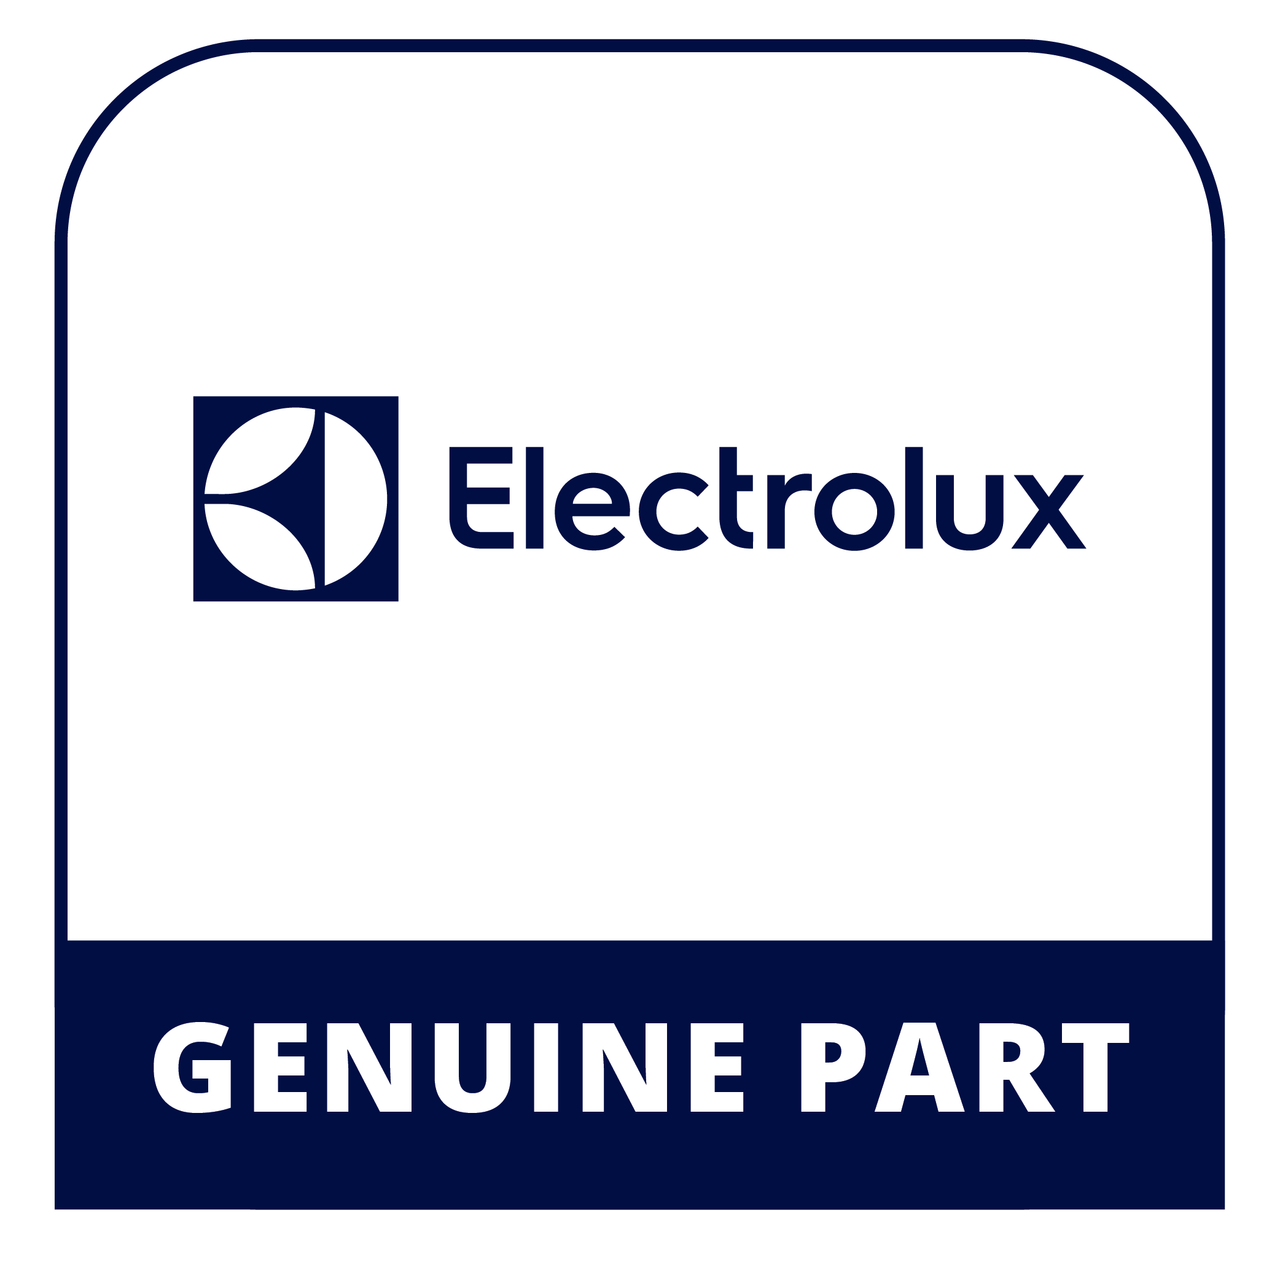 Frigidaire - Electrolux 5304461148 Plate - Genuine Electrolux Part